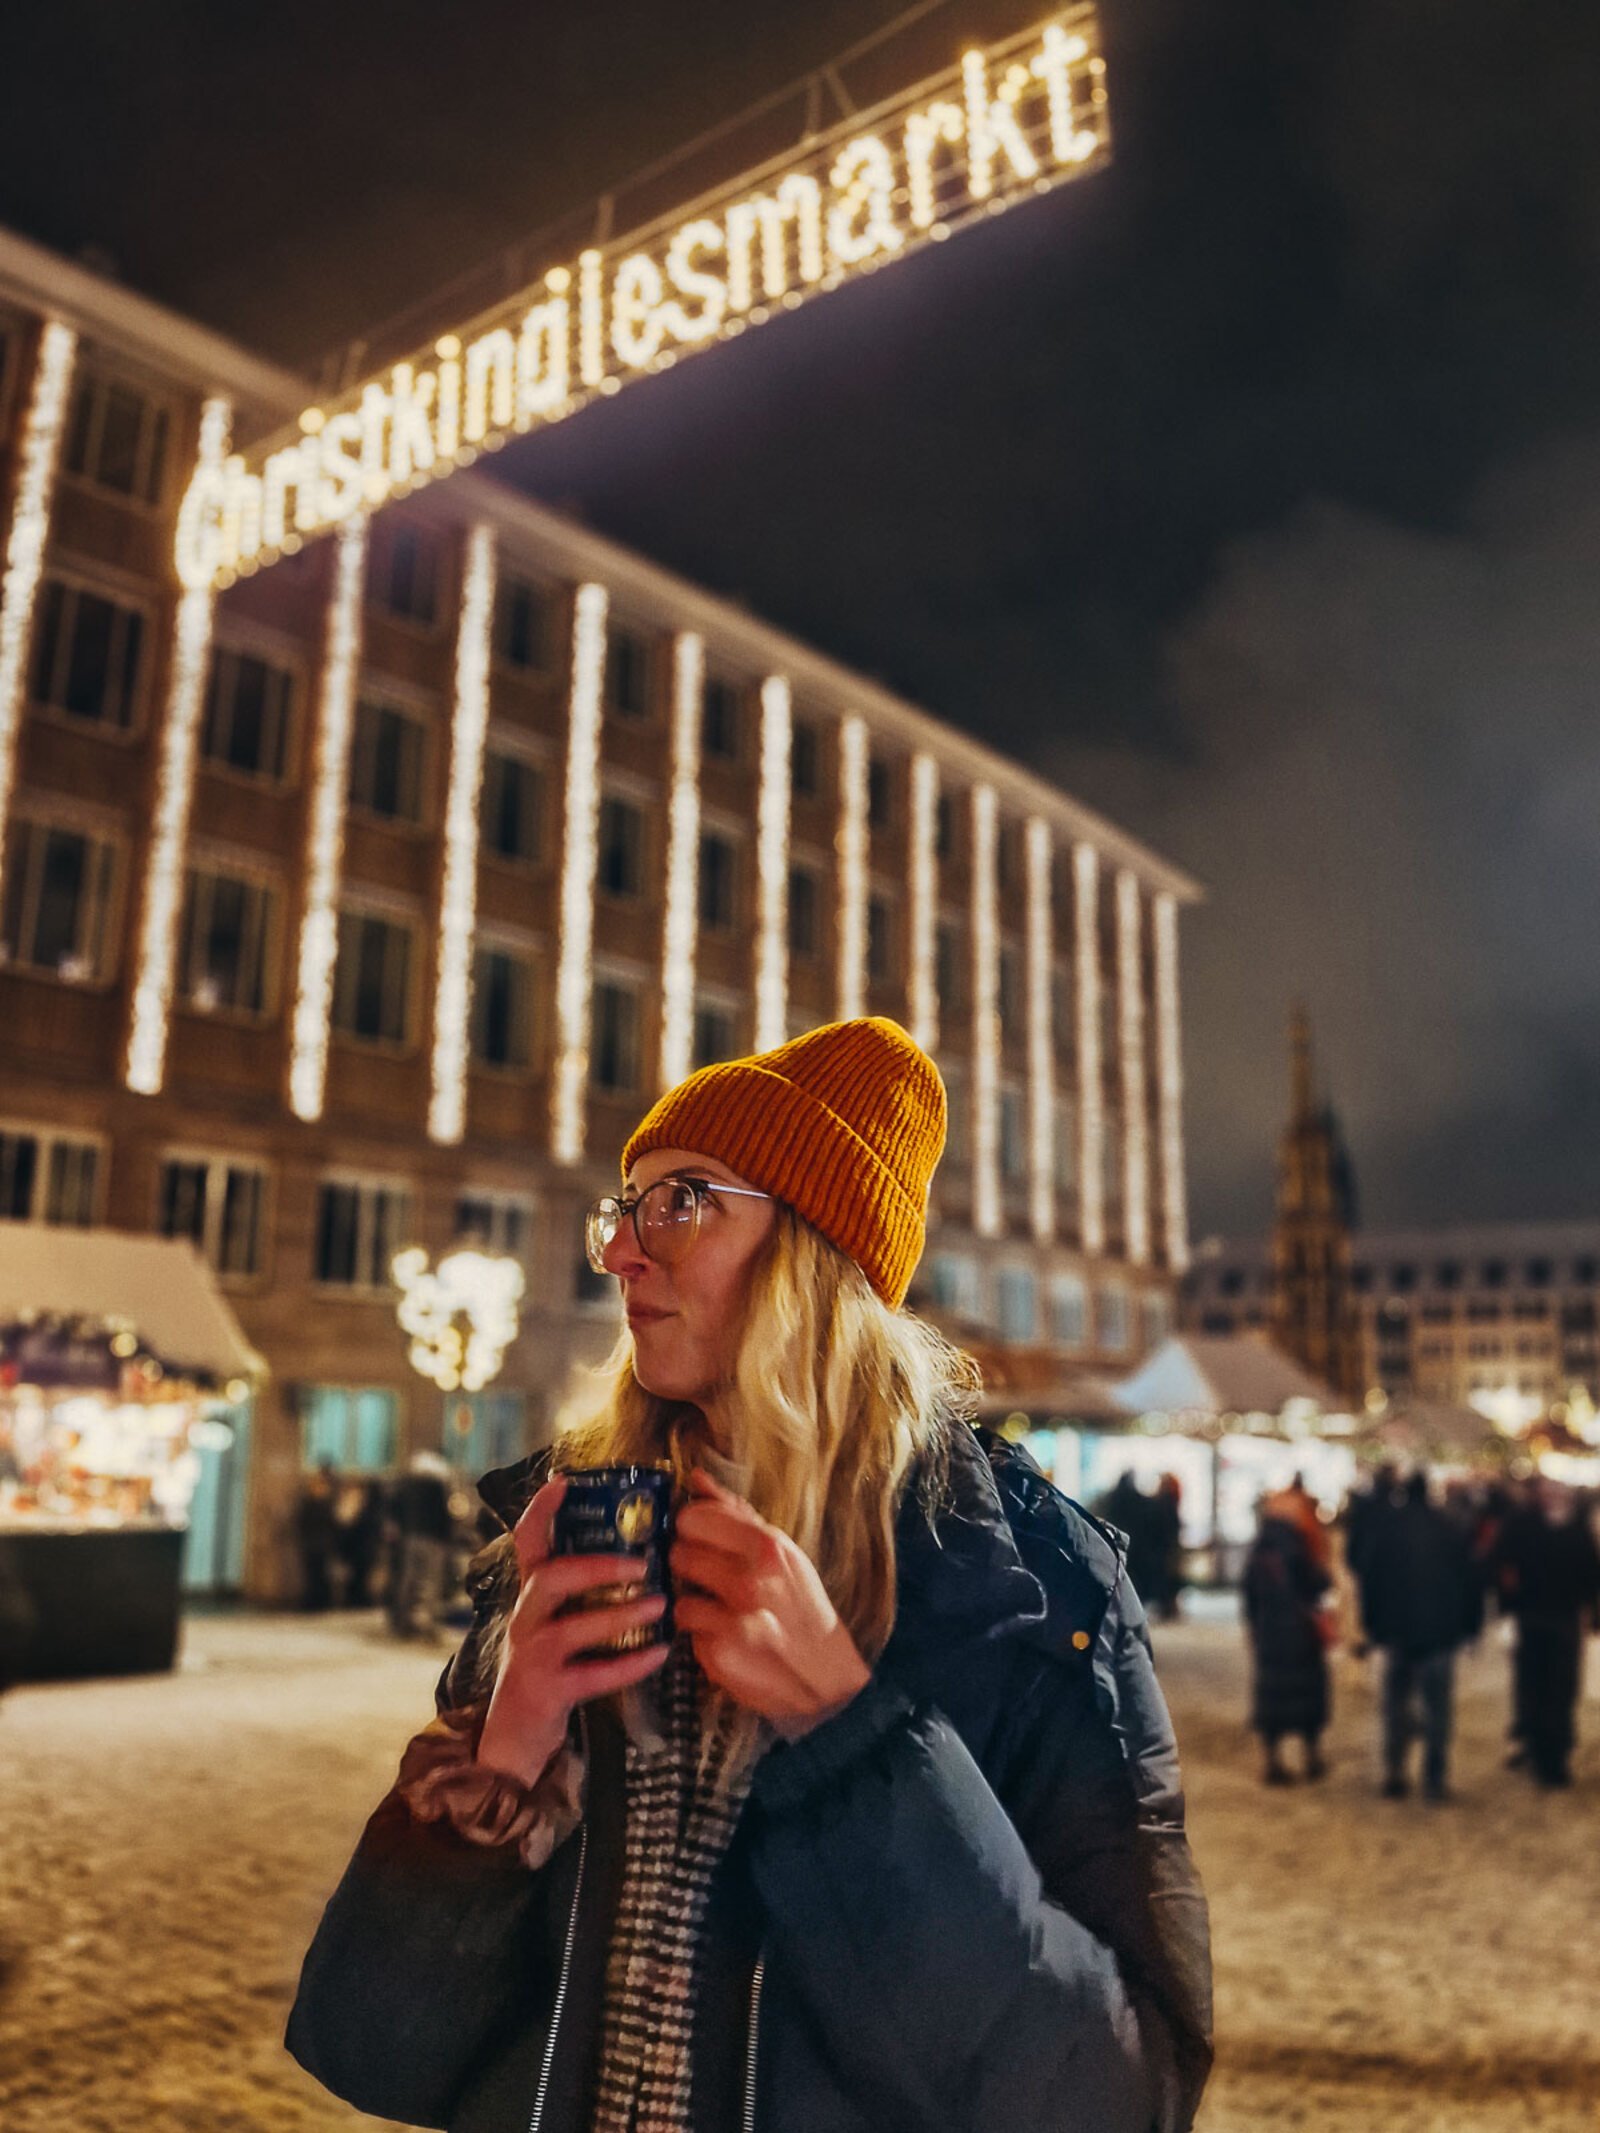 girl holding a mug inder an illuminated sign that says Christkindlesmarkt